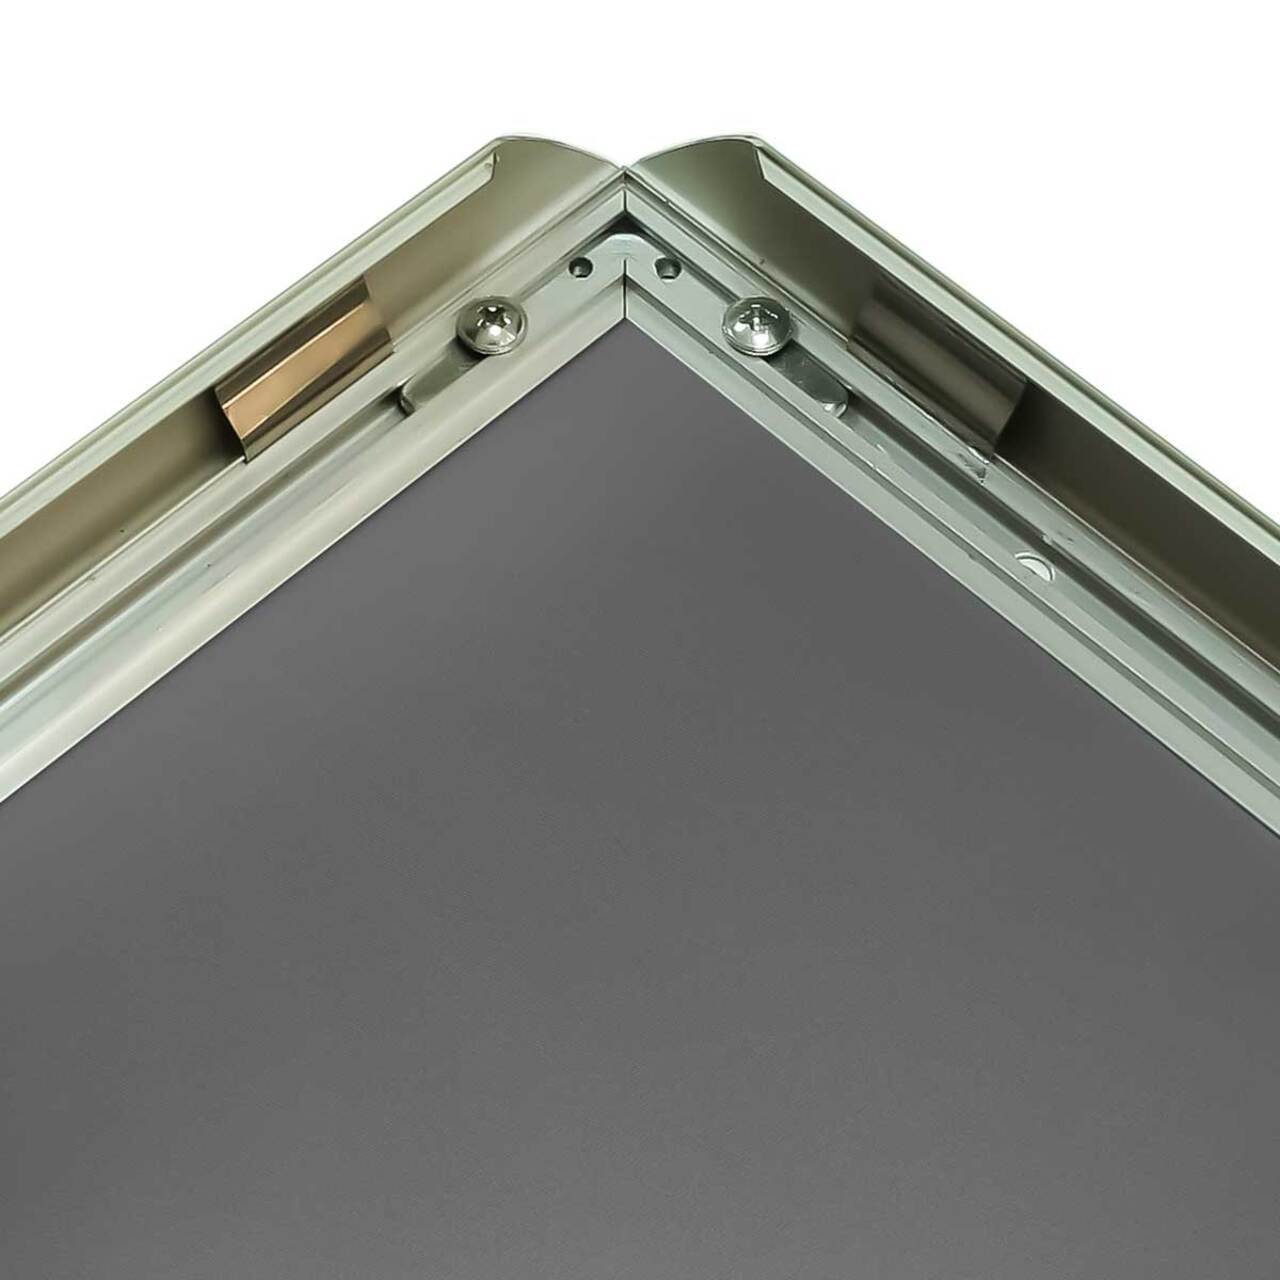 Window Frame 25, ramă click din aluminiu pentru ferestre B2 500 x 700 mm JJ DISPLAYS